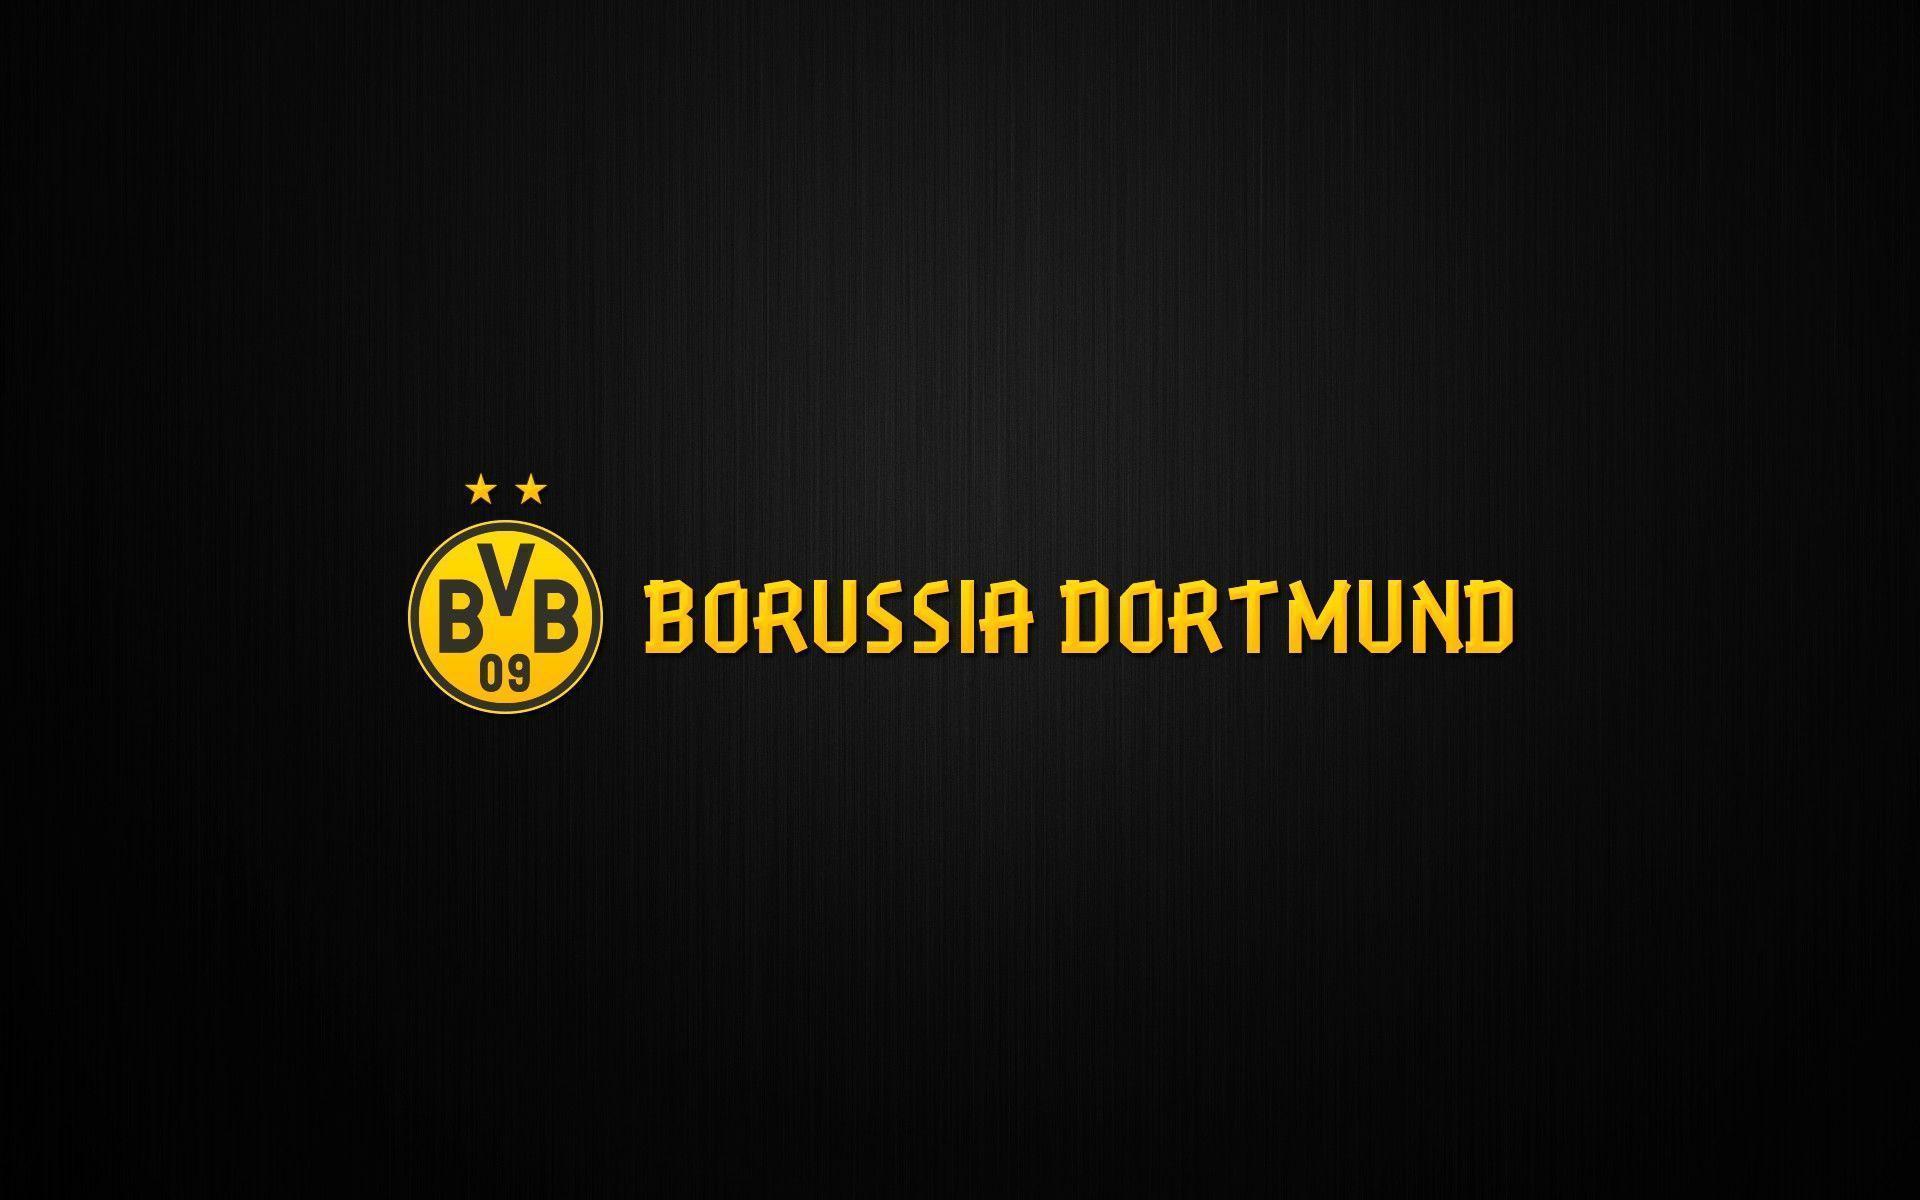 Borussia Dortmund uniform